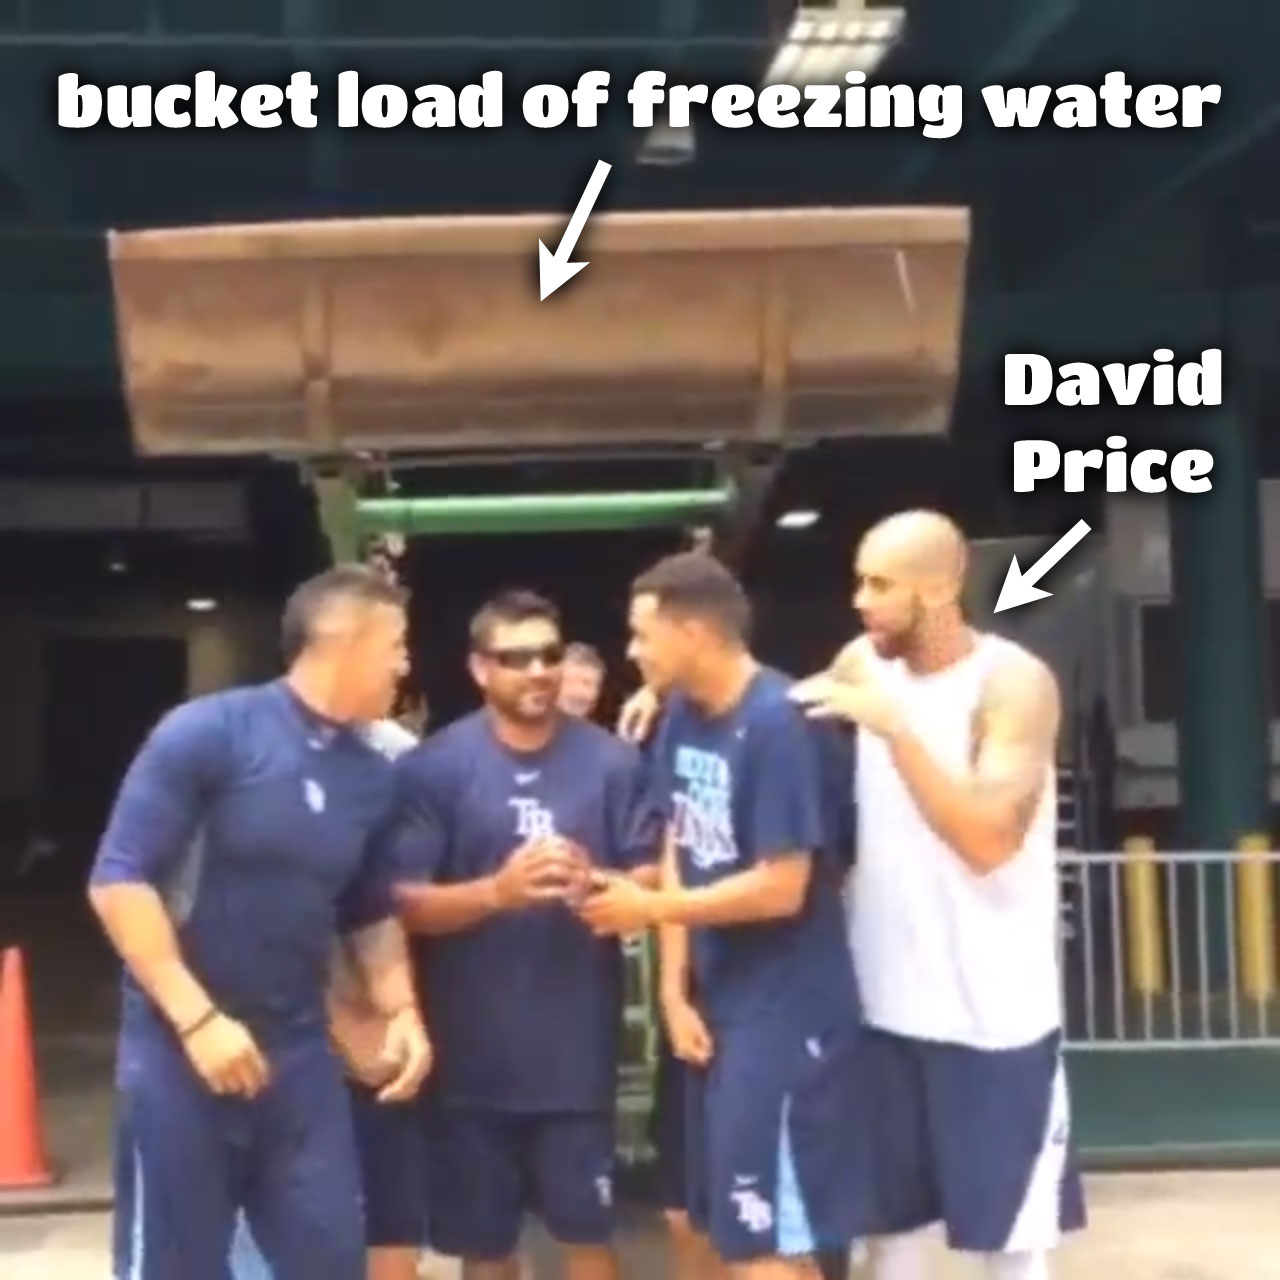 Tigers pitcher David Price takes the ALS Ice Bucket Challenge